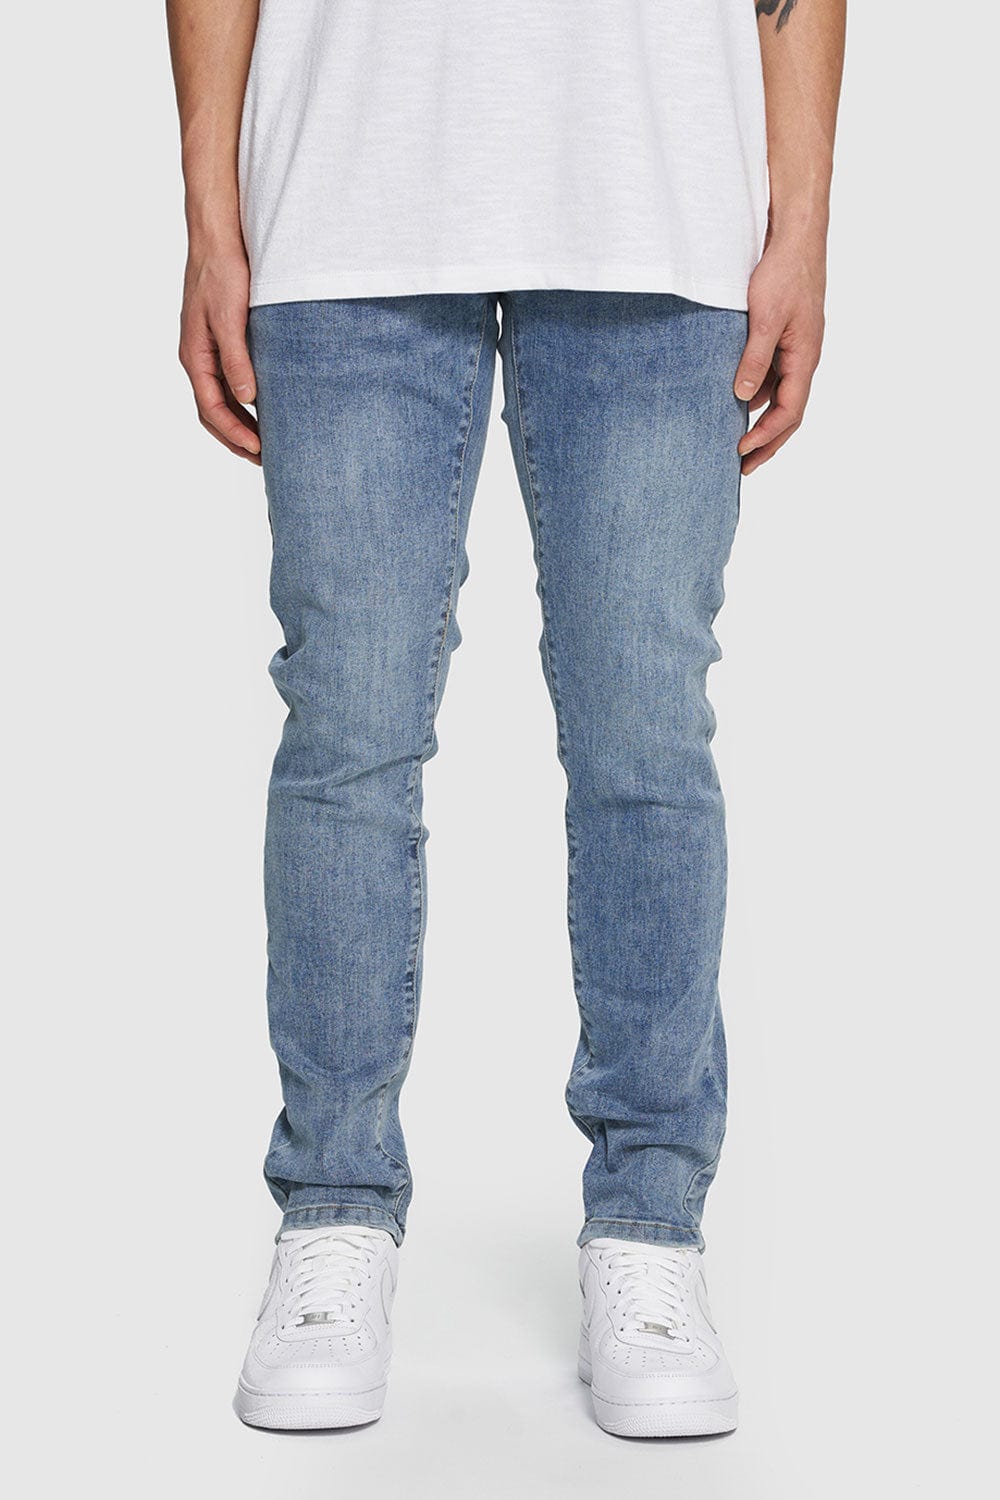 Men's Denim - Jackets, Shorts, Joggers, Jeans